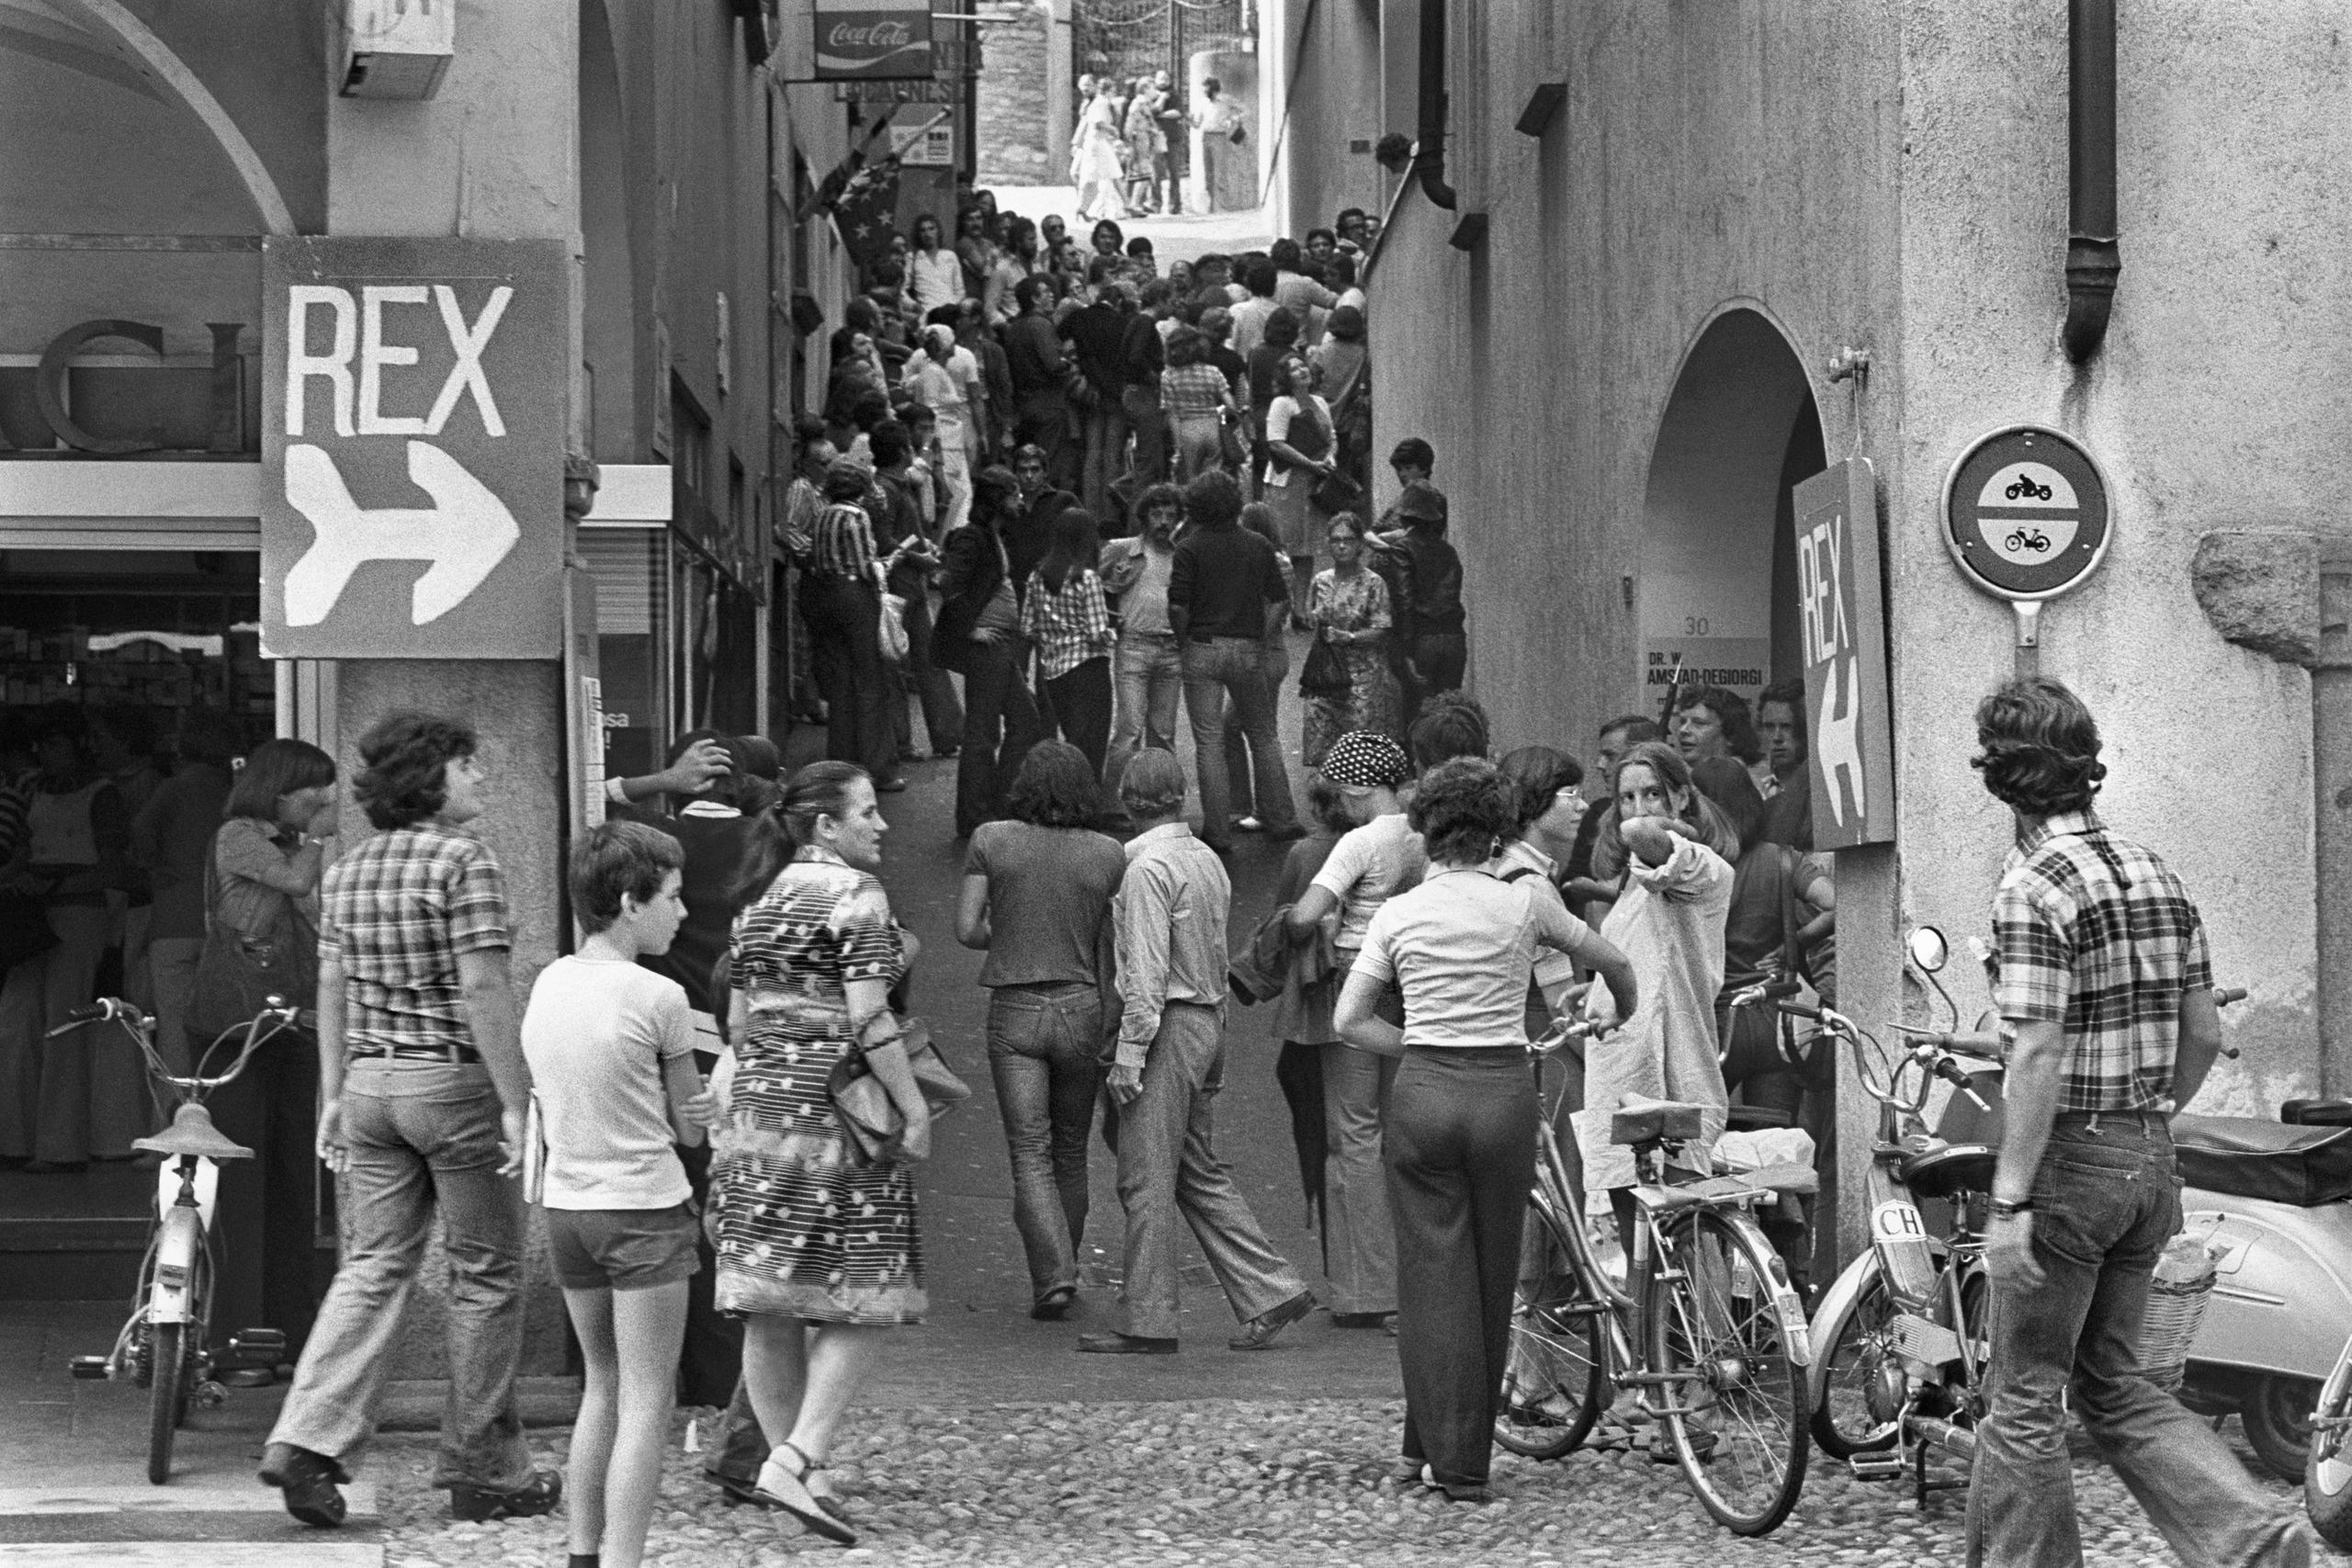 Rex Cinema Locano, crowd waiting in the narrow alley